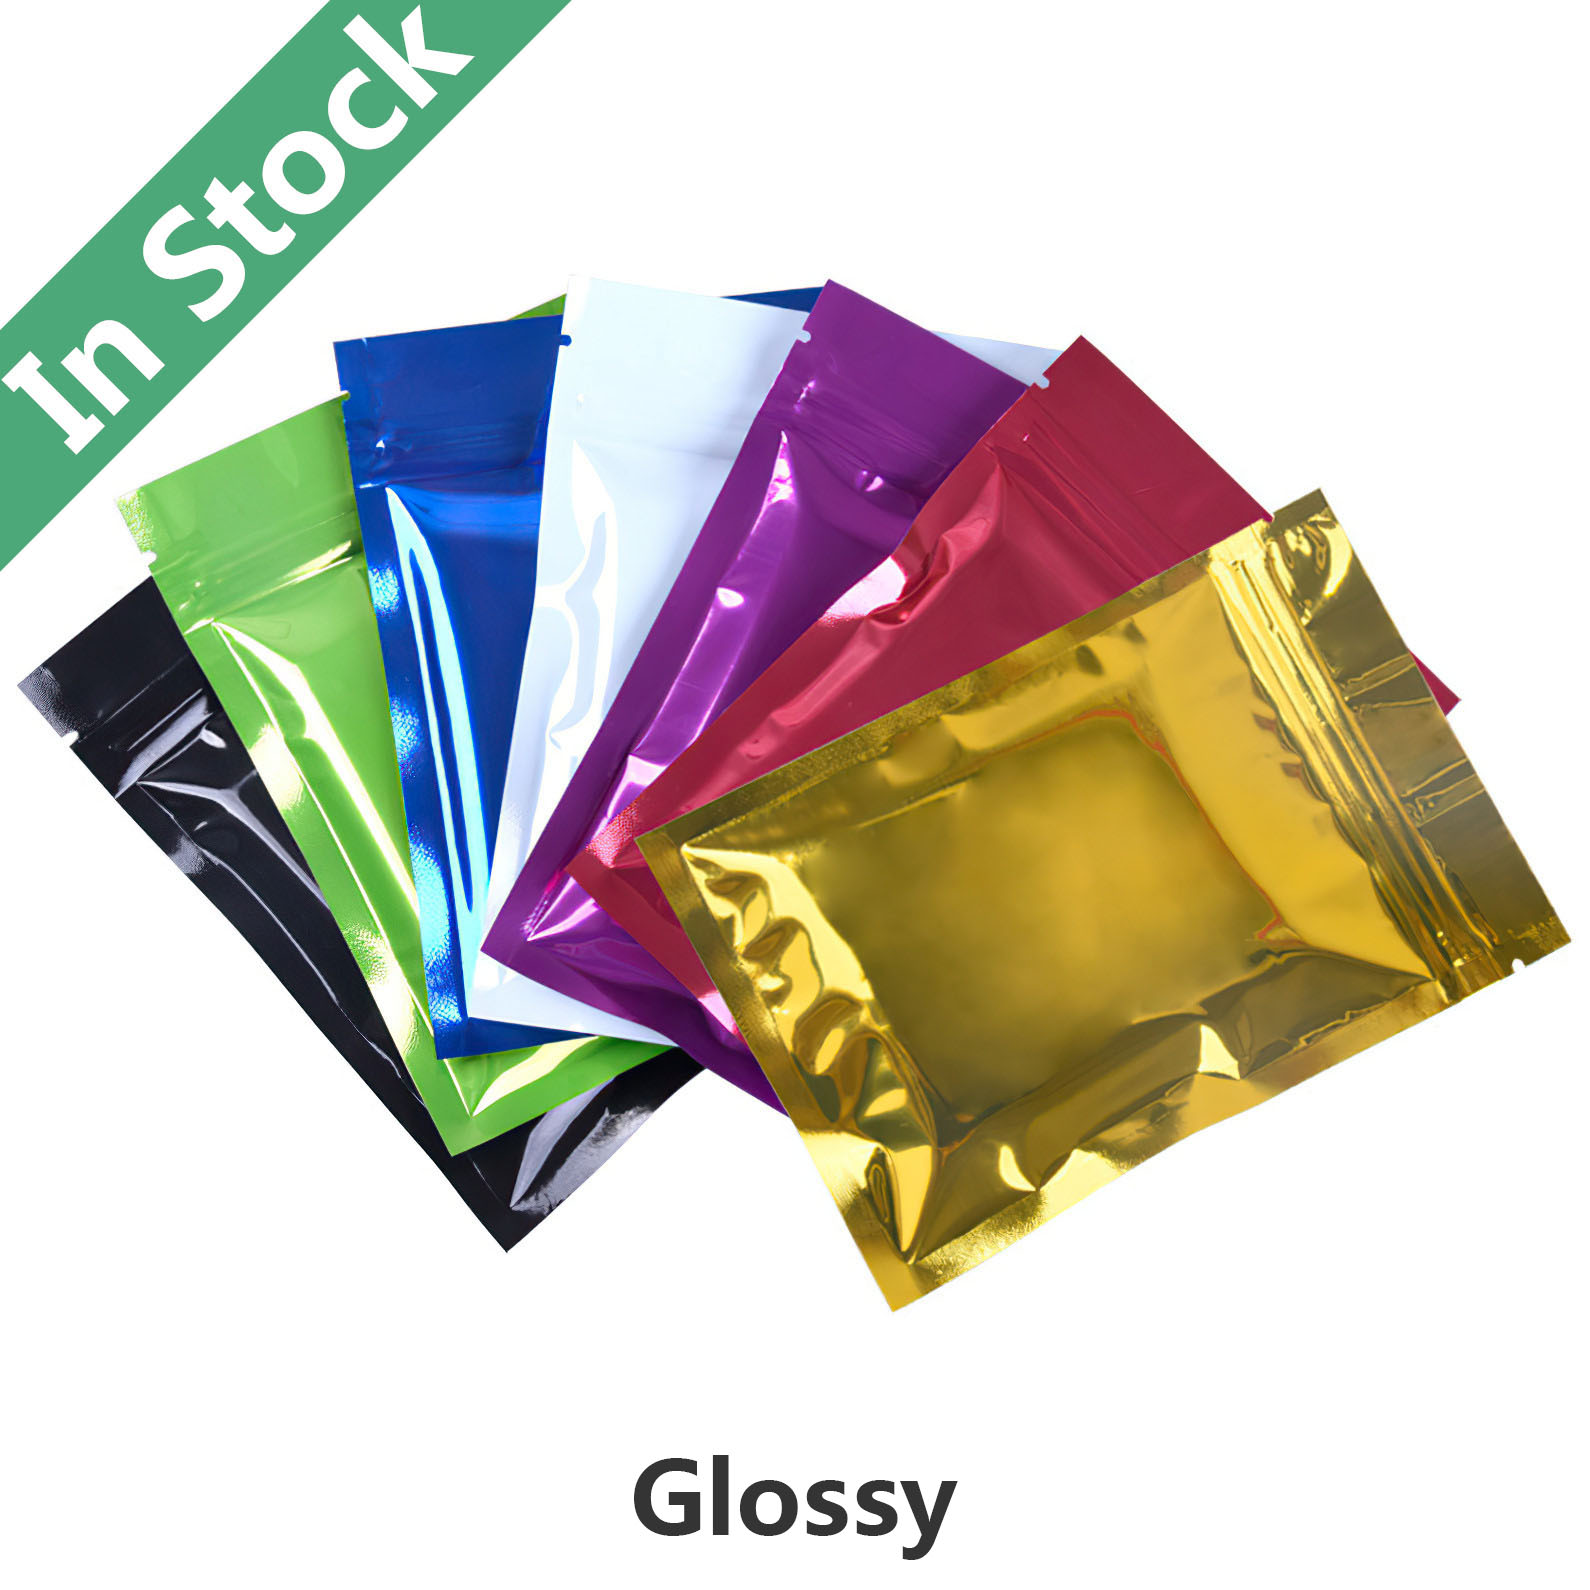 https://www.dreamcitypack.com/shoppic/flat-colorful-aluminum-foil-ziplock-bags-a.jpg